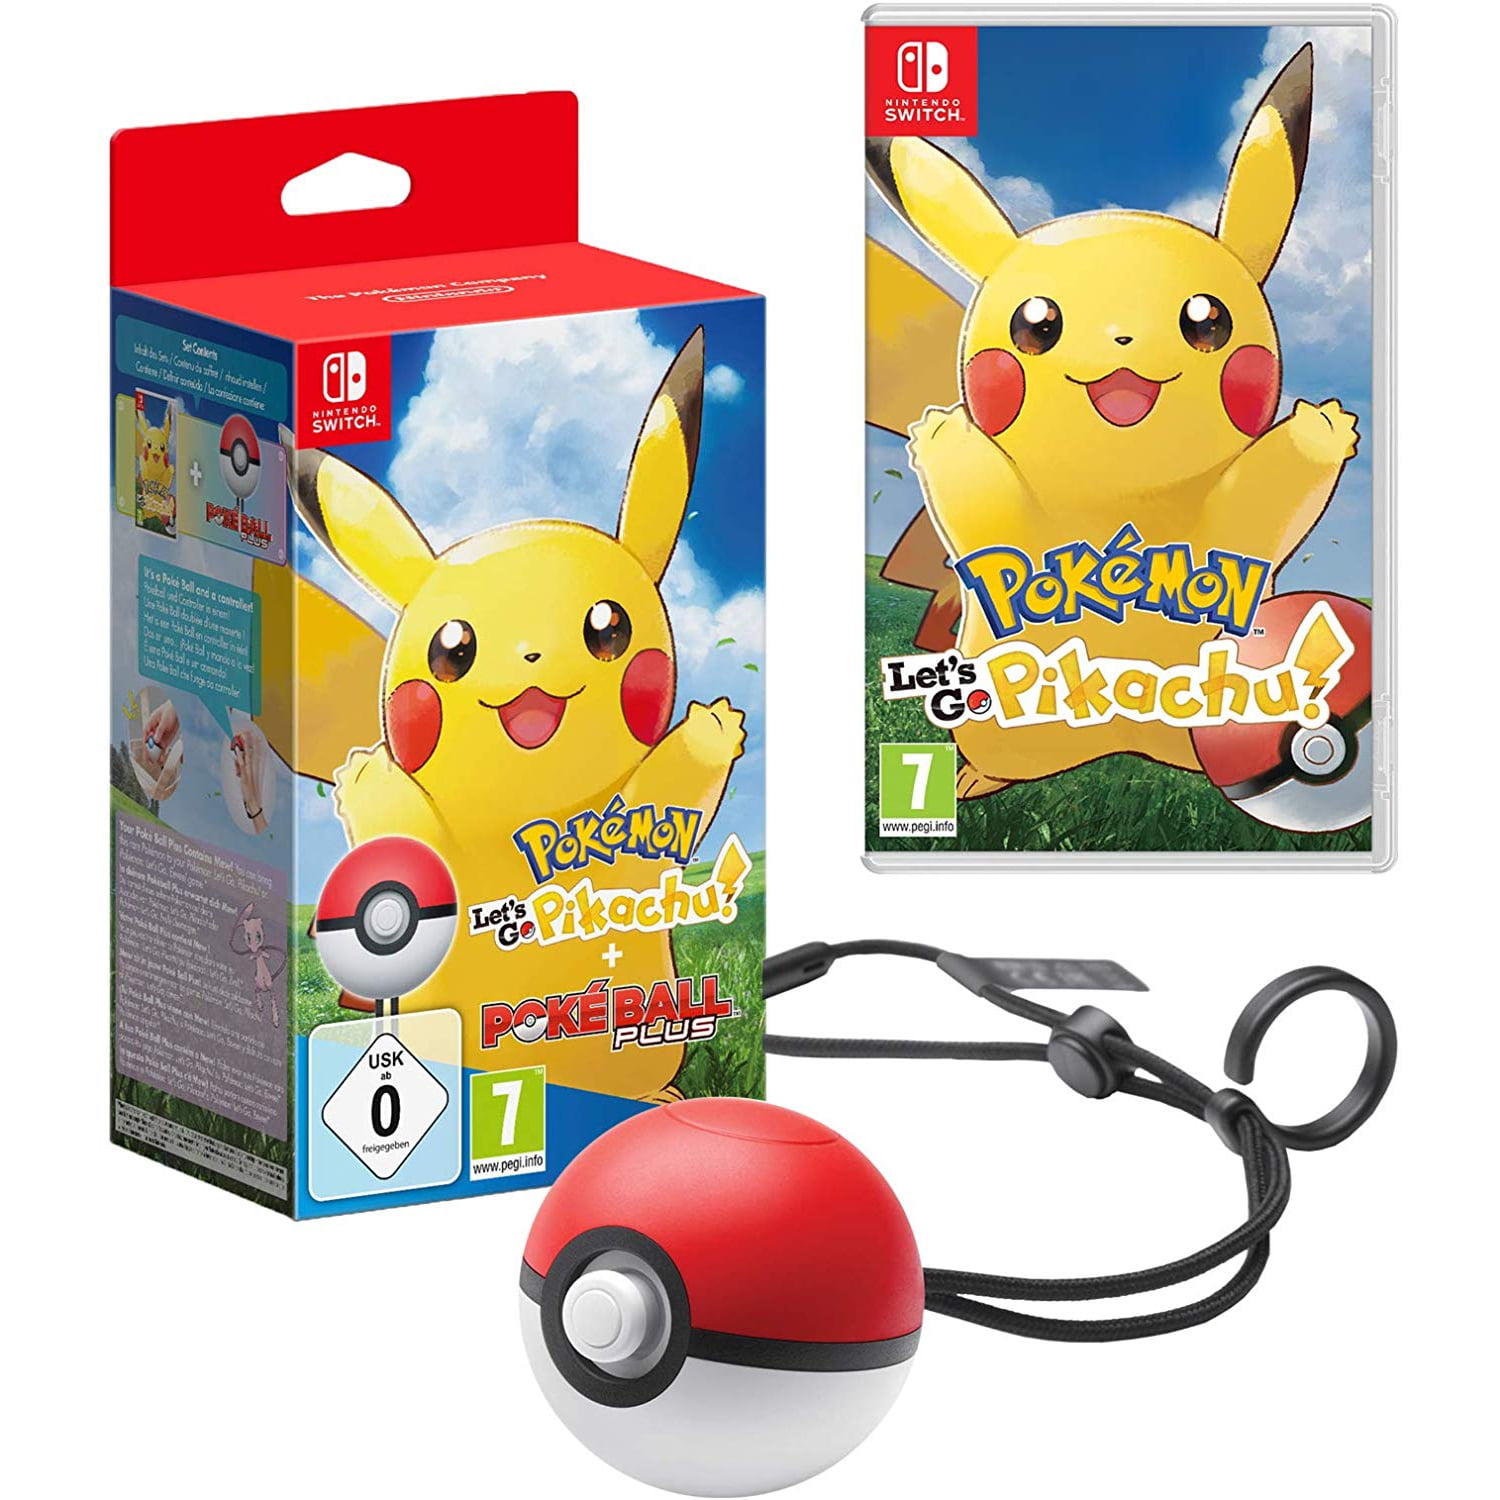 Pokémon Lets Go Pikachu W Poké Ball Plus Video Game For